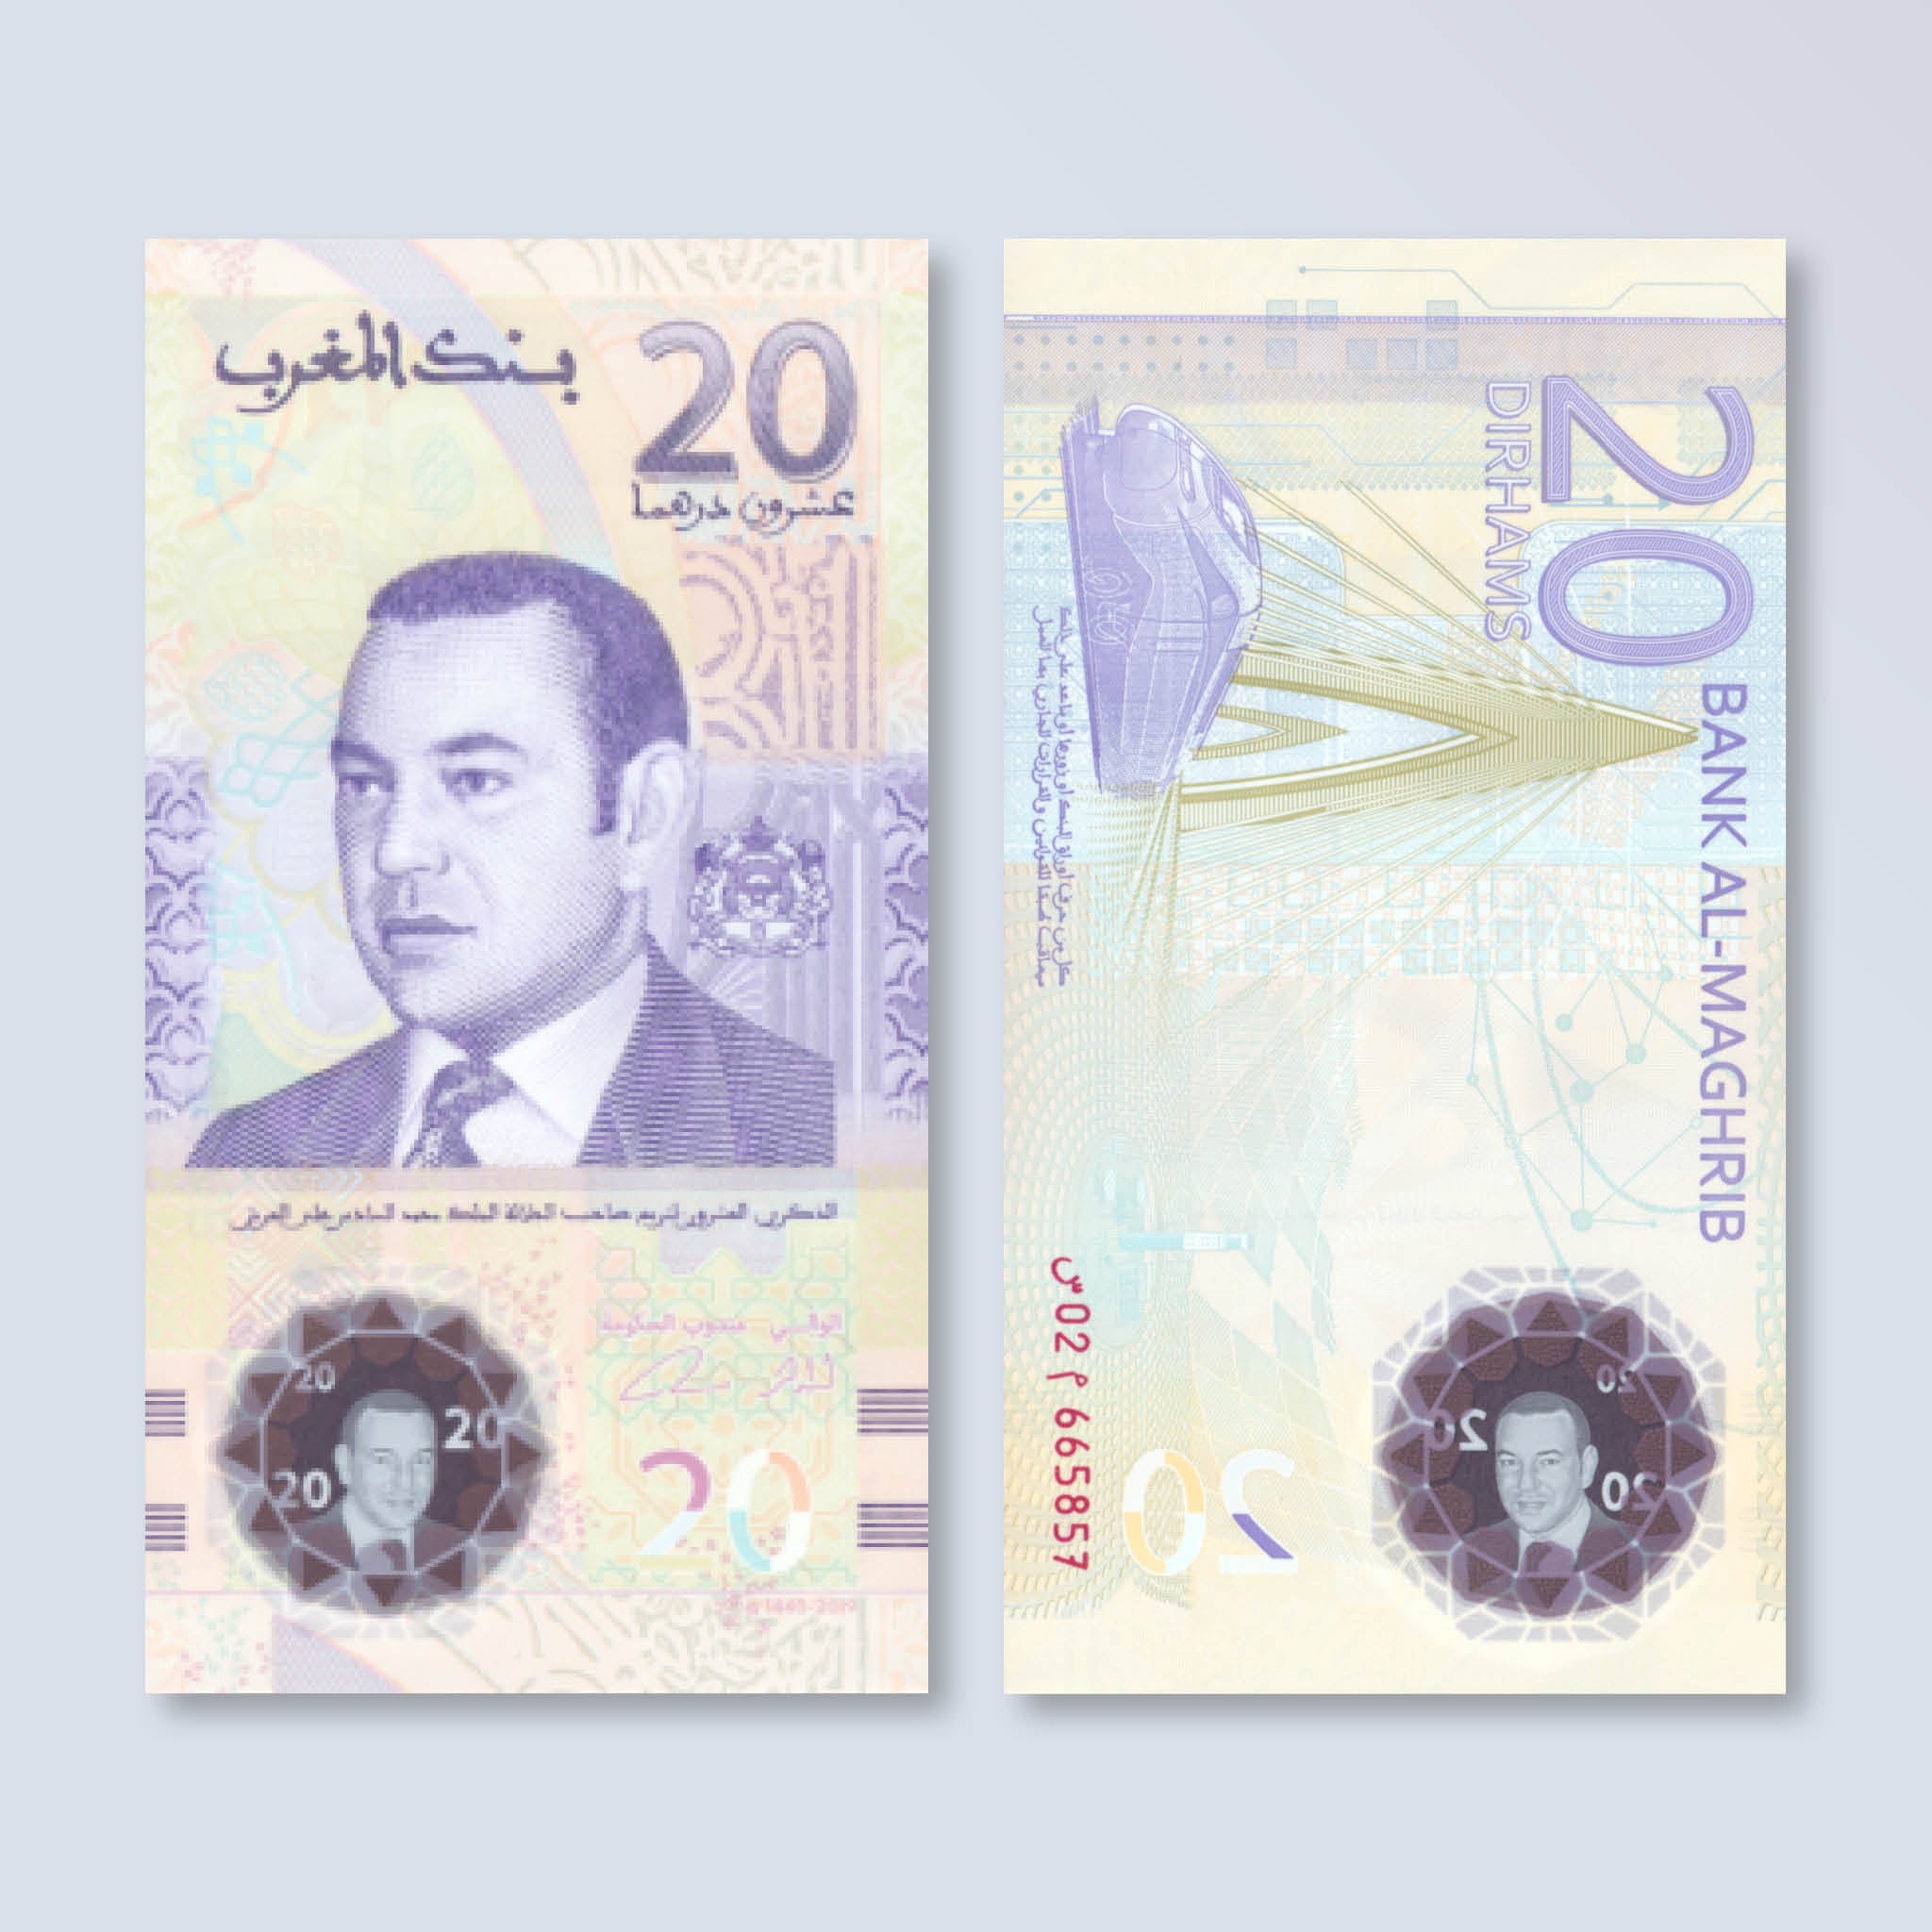 Morocco 20 Dirhams, 2019 Commemorative, B519a, UNC - Robert's World Money - World Banknotes